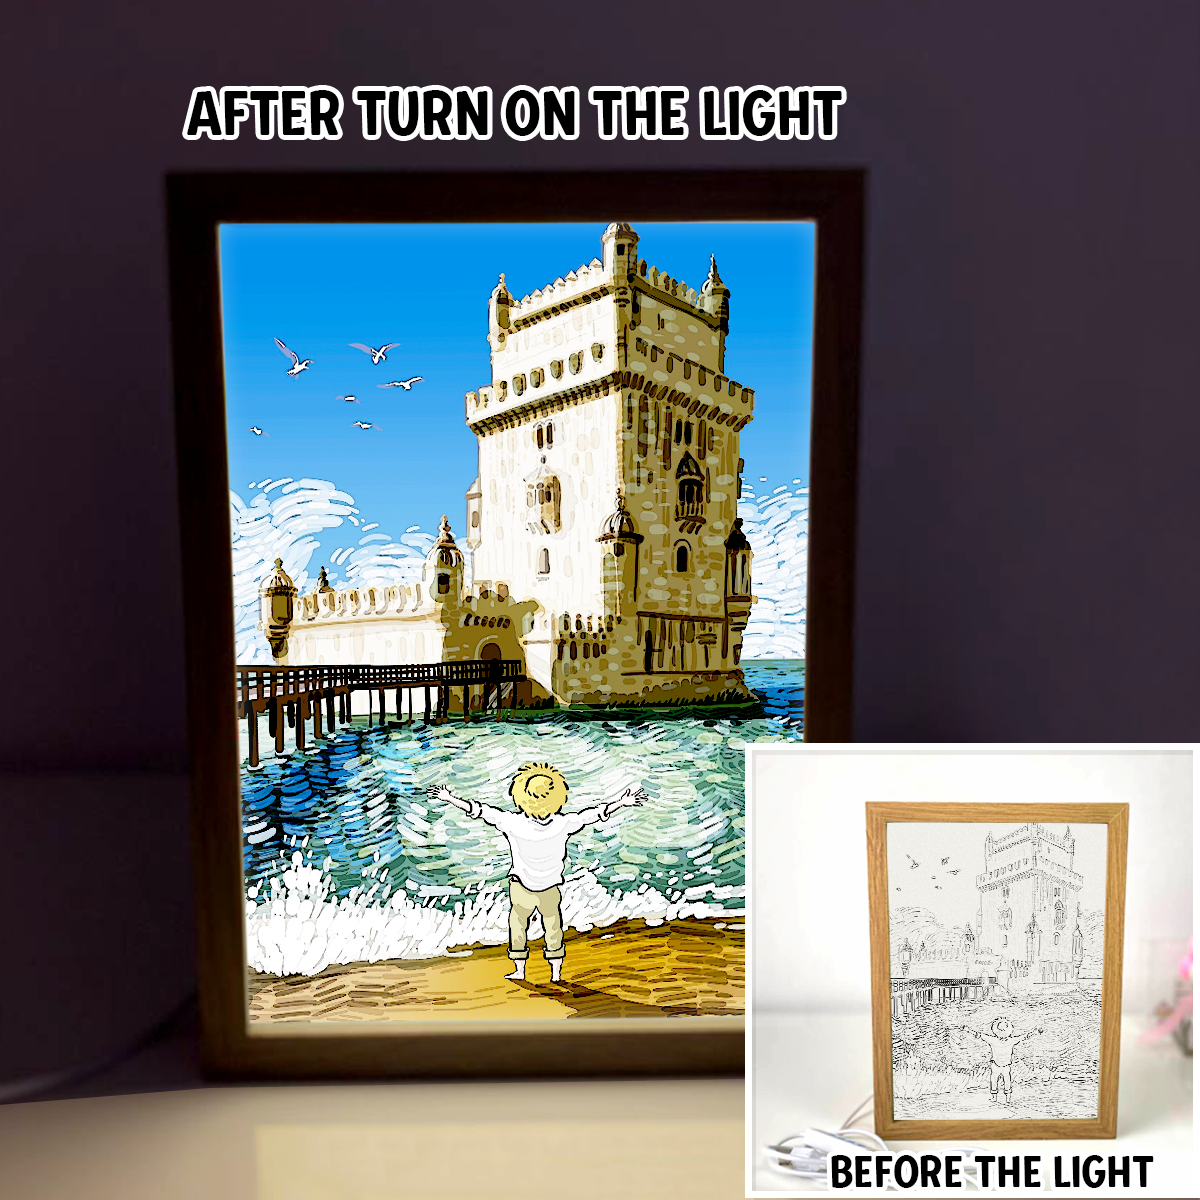 Enjoying The Sunshine On The Sea Beside An Old Castle 4D Art Led Light Wooden Frame Night Light Decoration